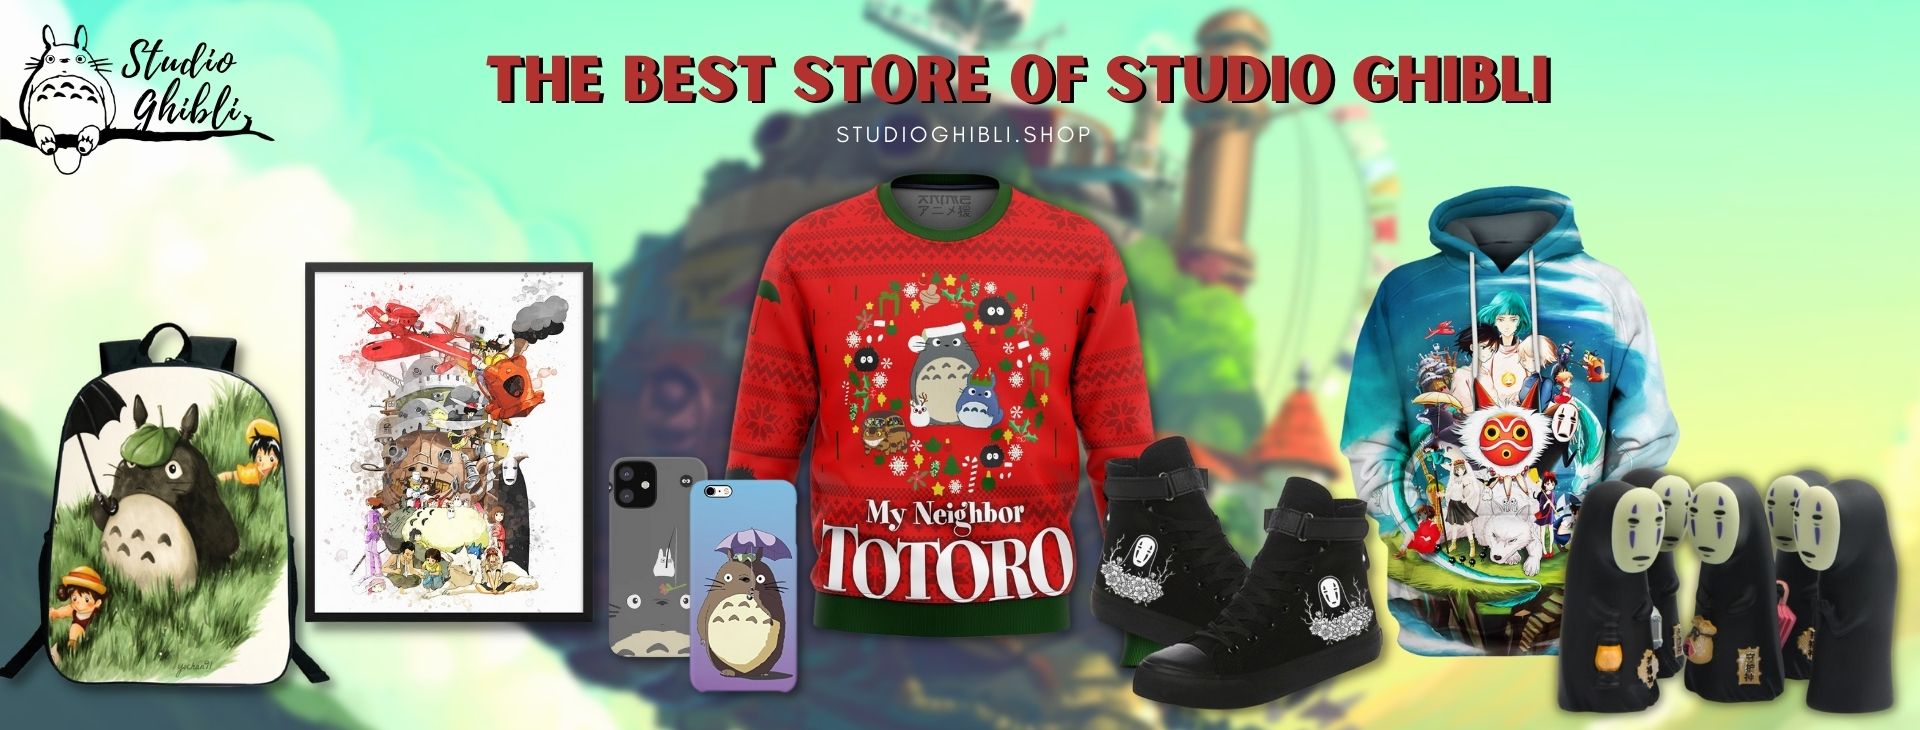 Studio Ghibli Shop - The World's Studio Ghibli Store